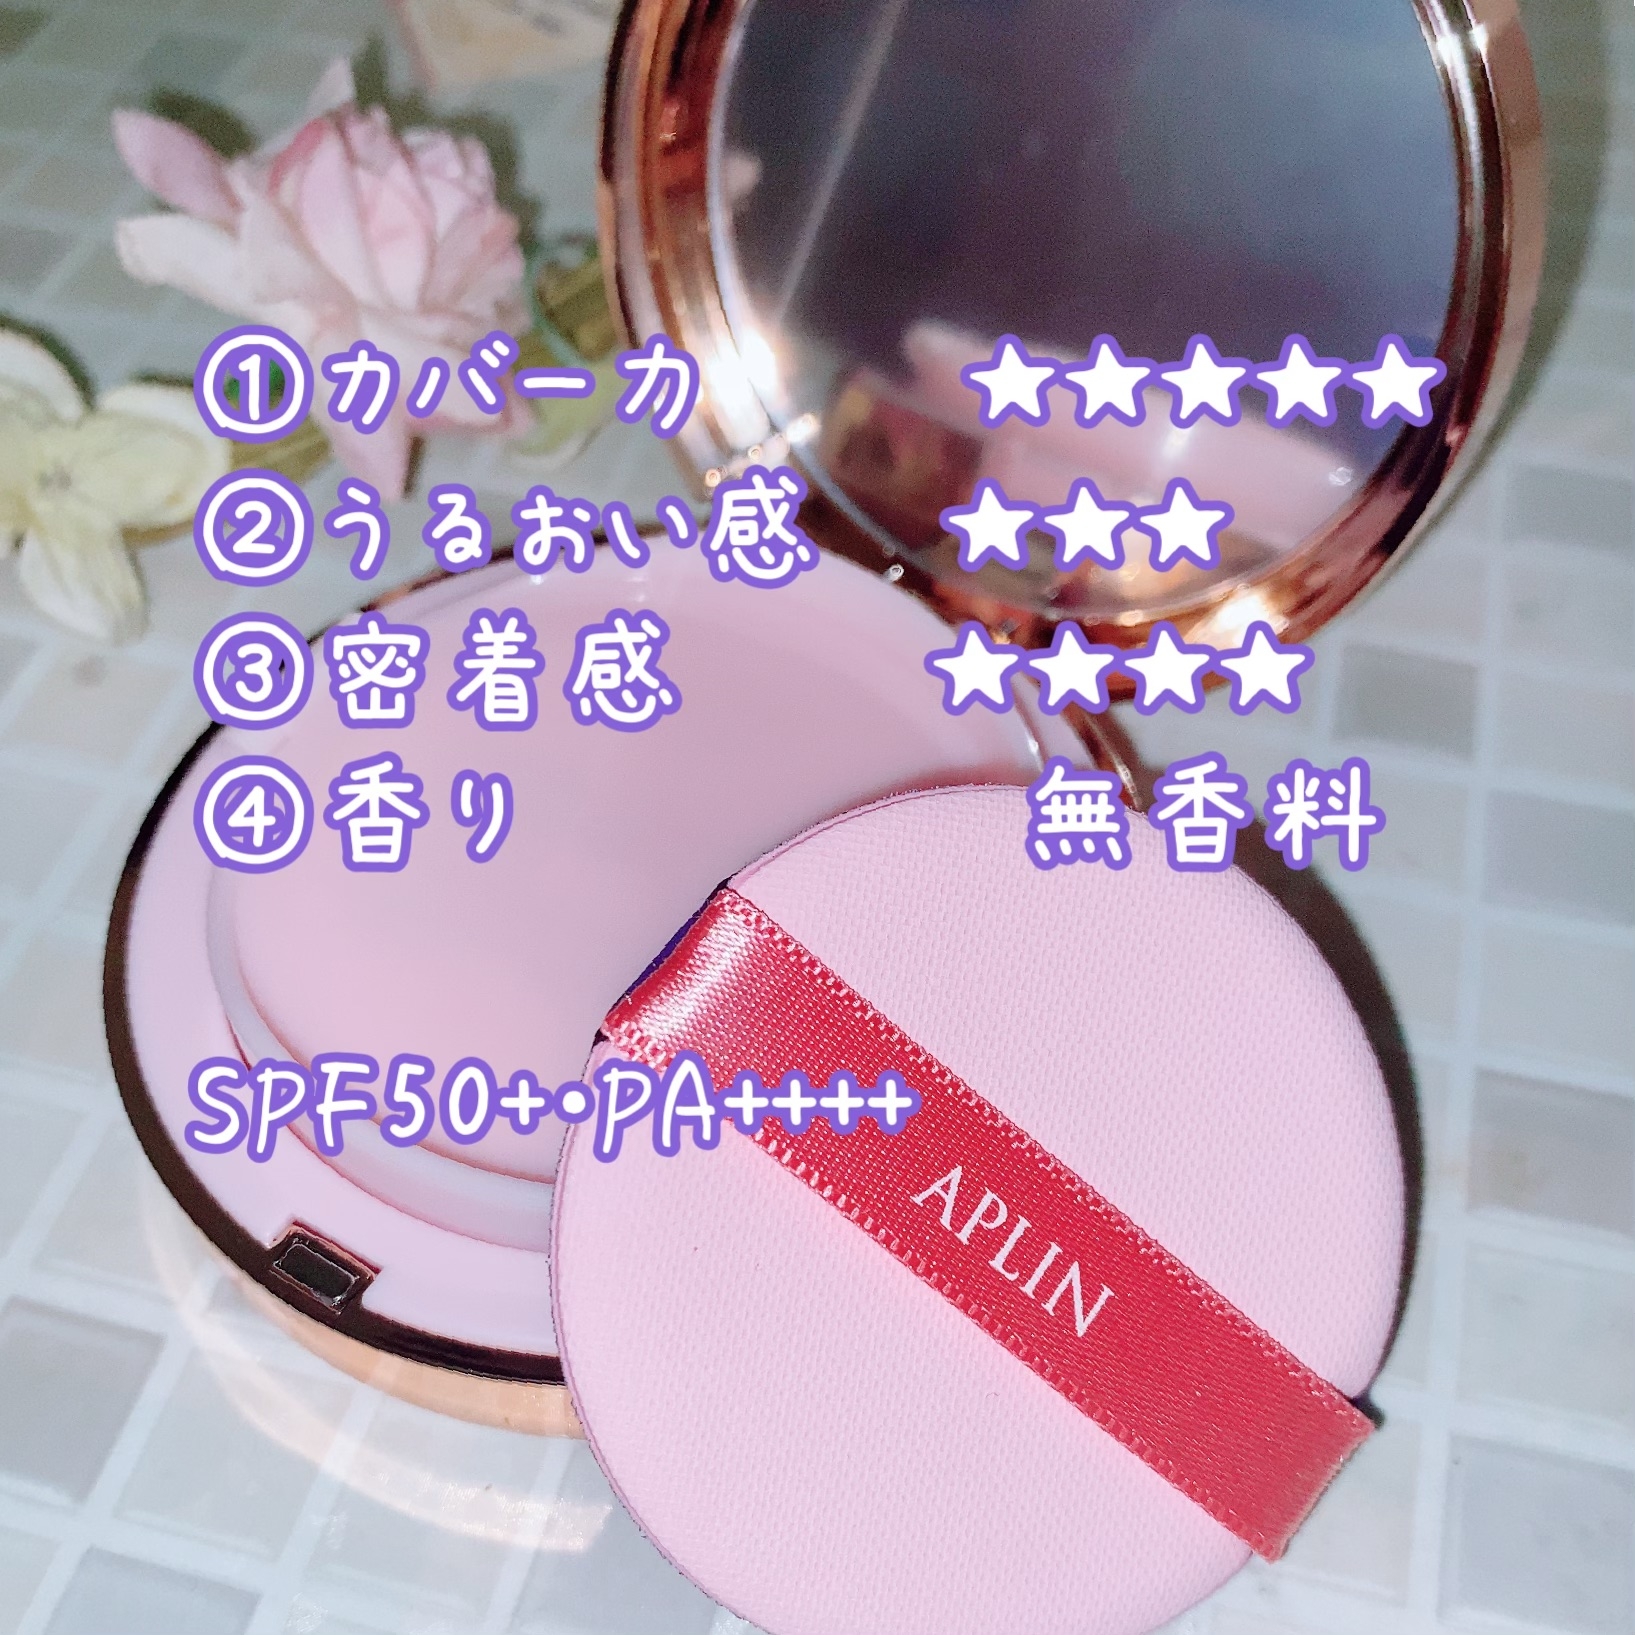 APLIN(アプリン) ピンクティーツリーカバークッションの良い点・メリットに関する珈琲豆♡さんの口コミ画像3